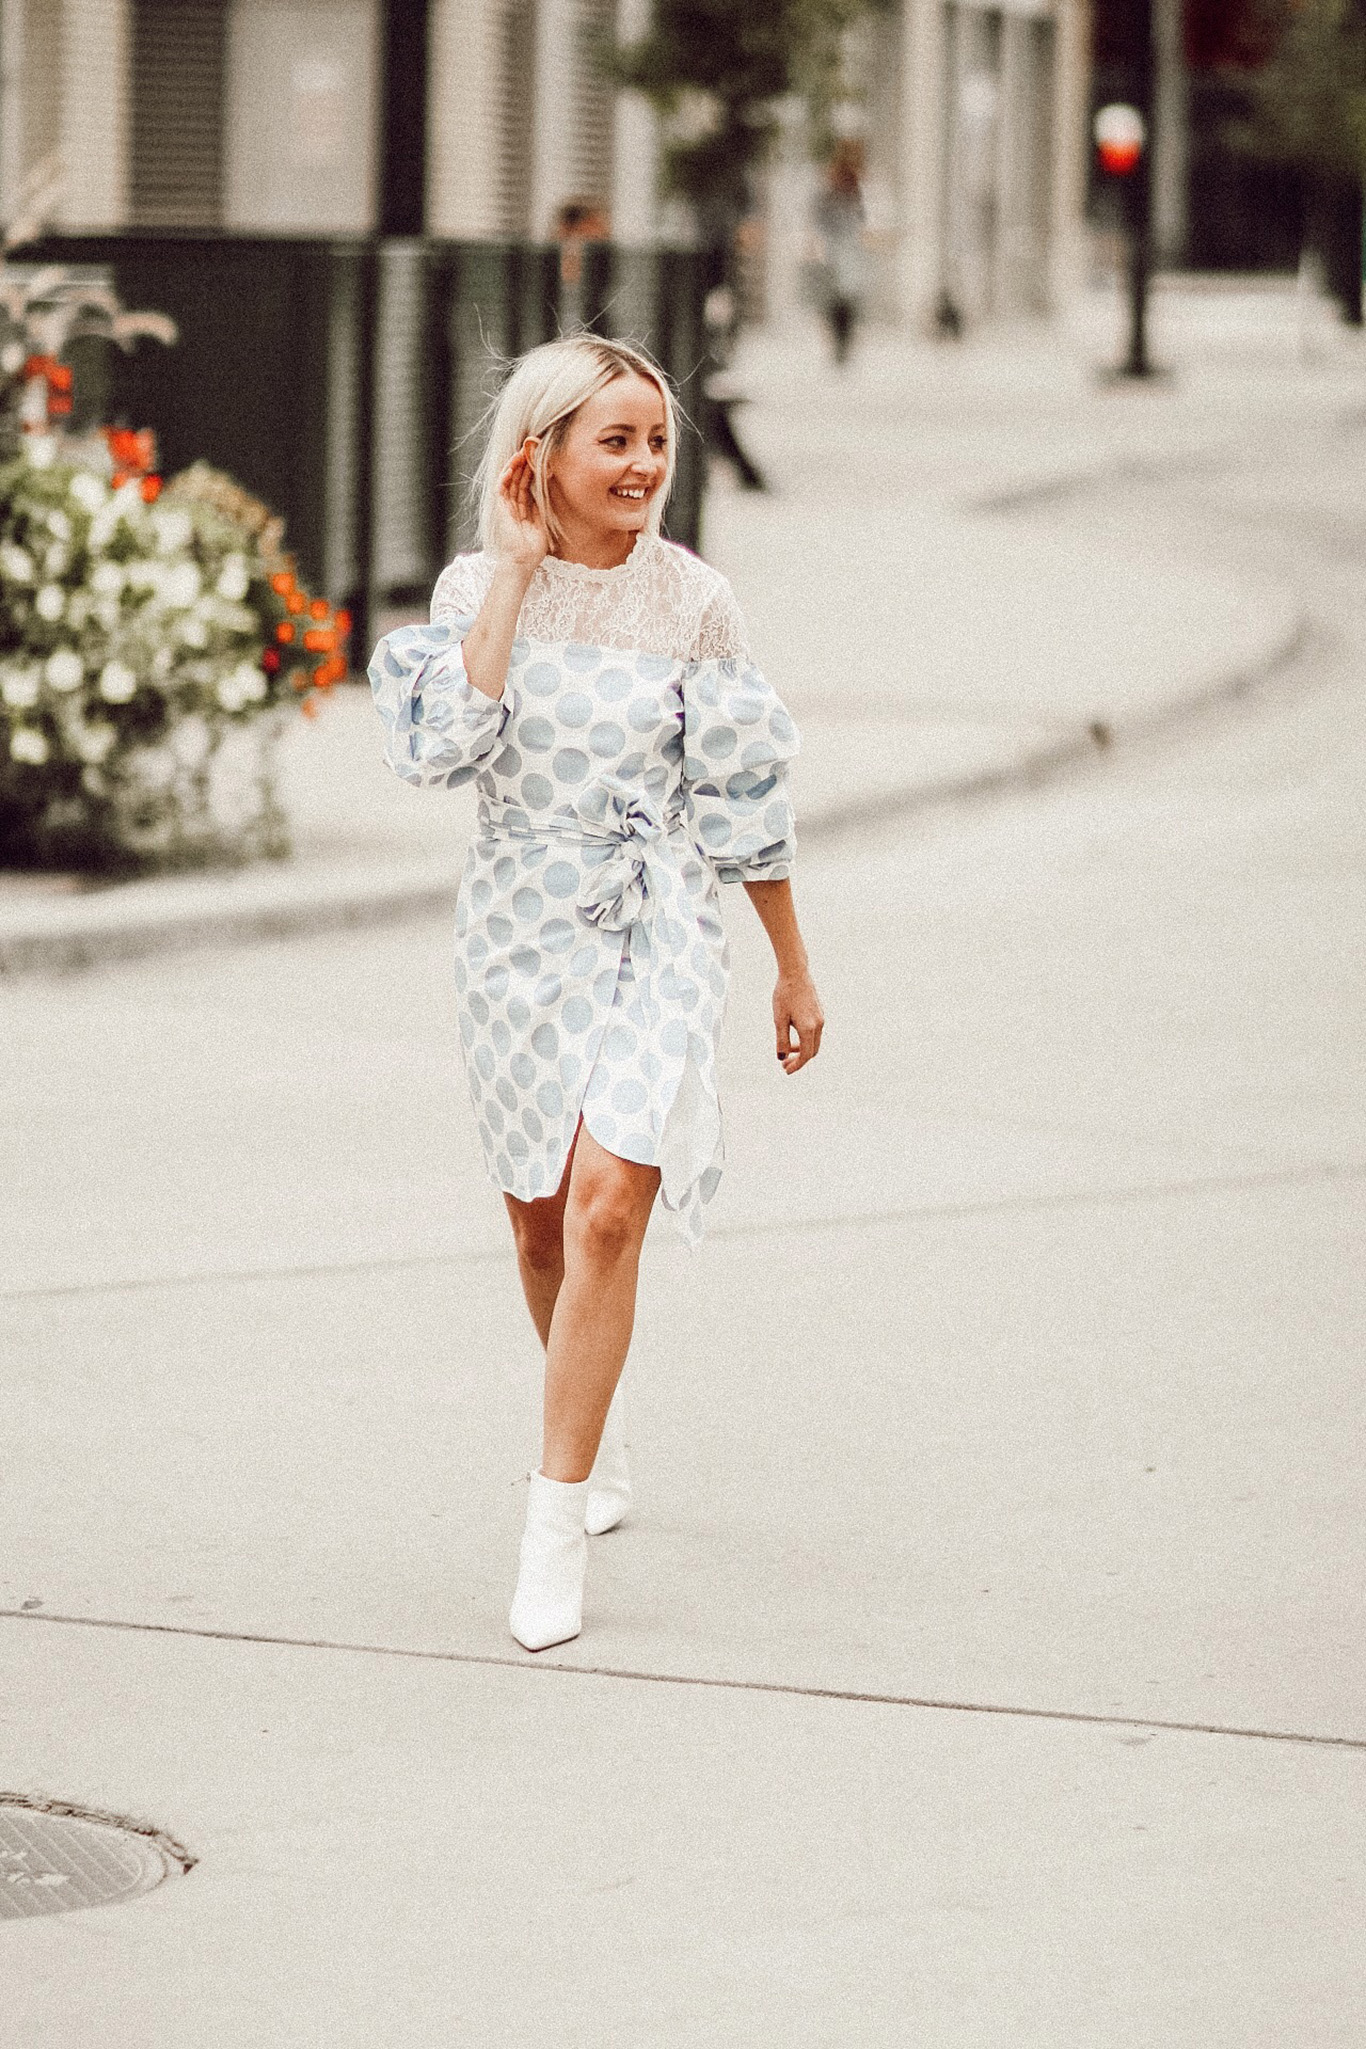 Alena Gidenko of modaprints.com shares her love for lace long sleeve tops